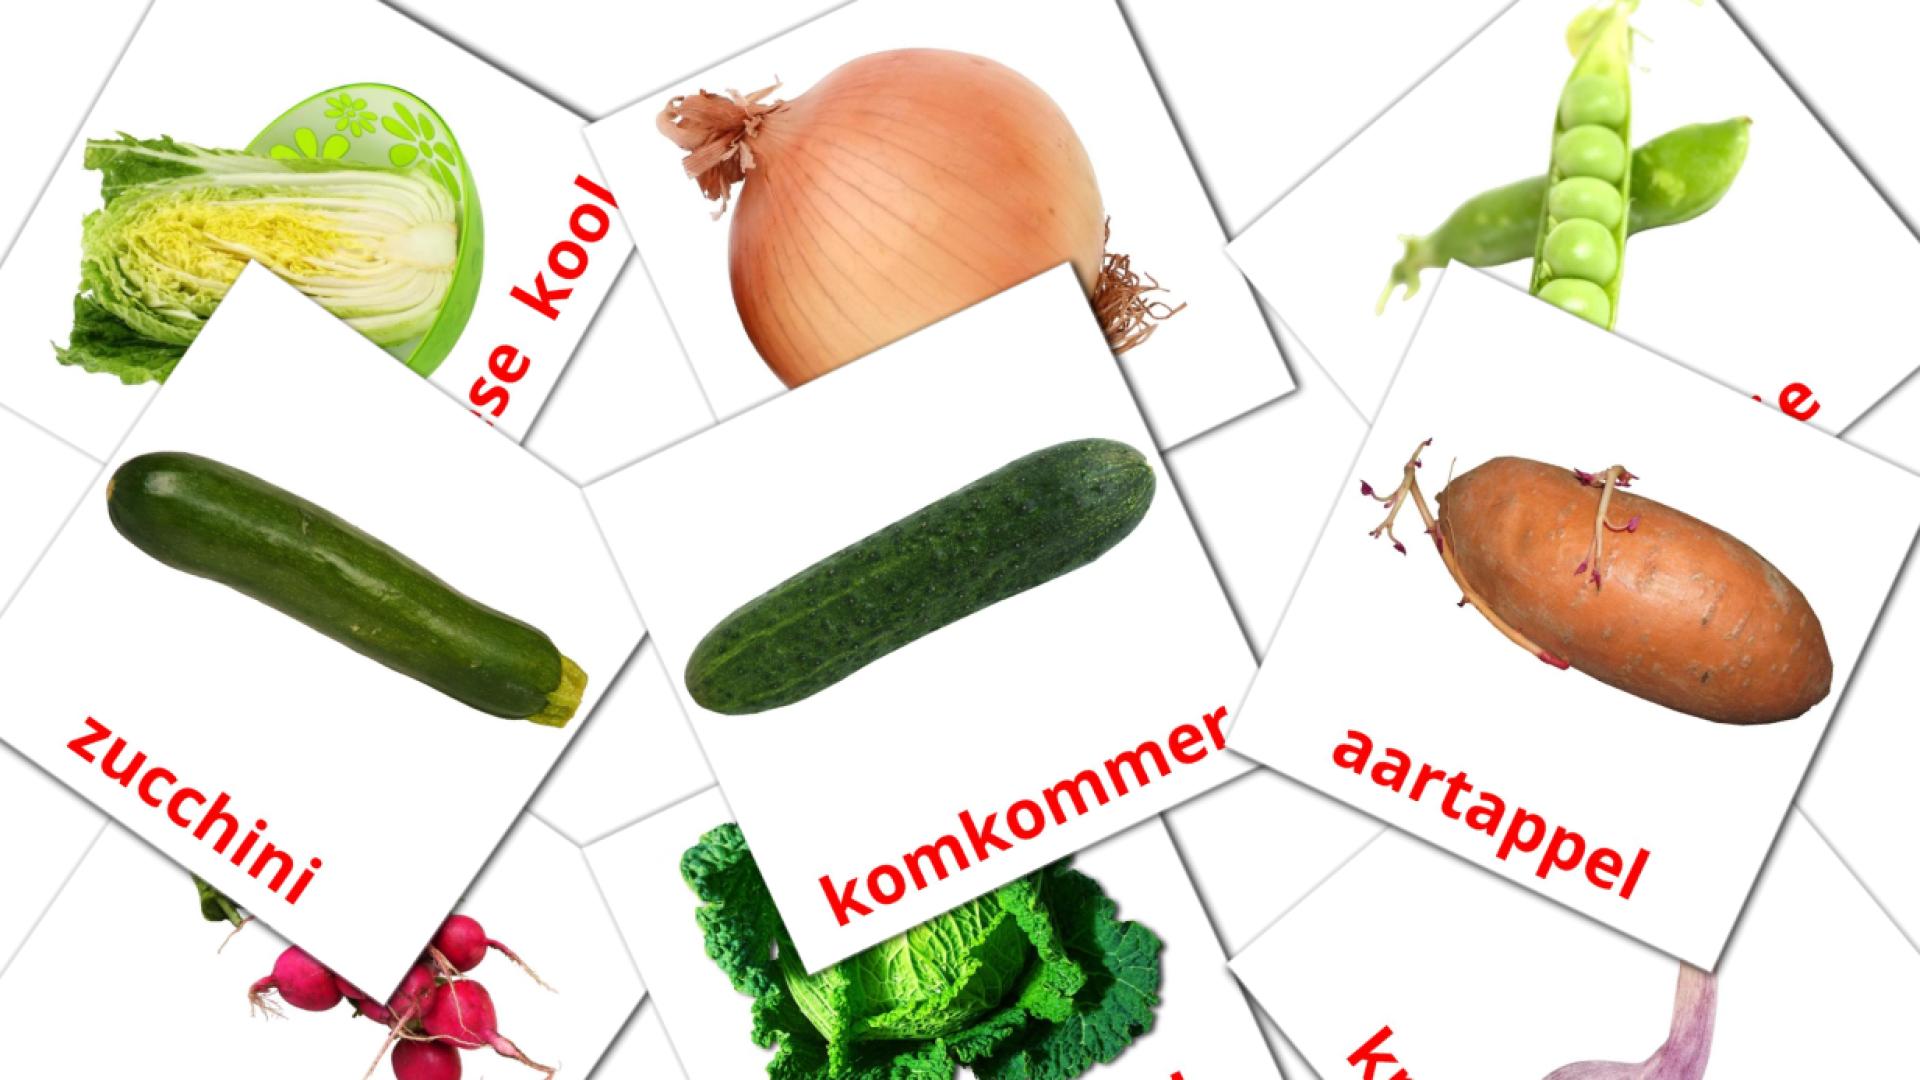 Verduras - tarjetas de vocabulario en afrikáans